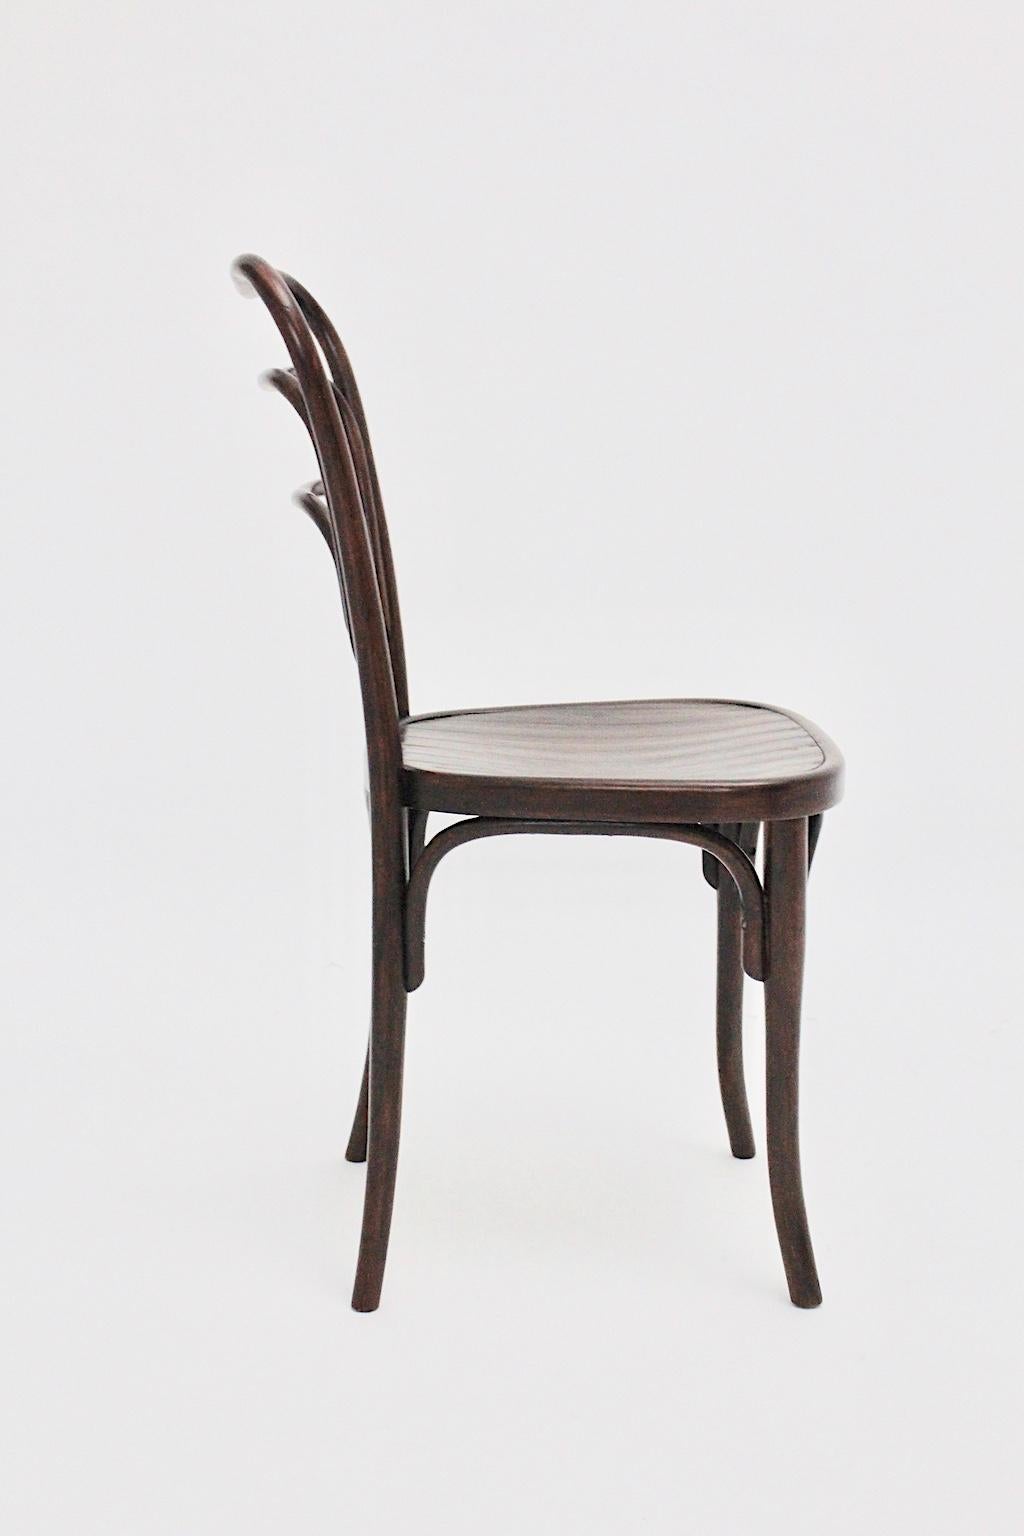 Jugendstil-Stuhl aus Bugholz Nr. 249 a von J. Kohn, um 1916, Österreich (Buchenholz) im Angebot